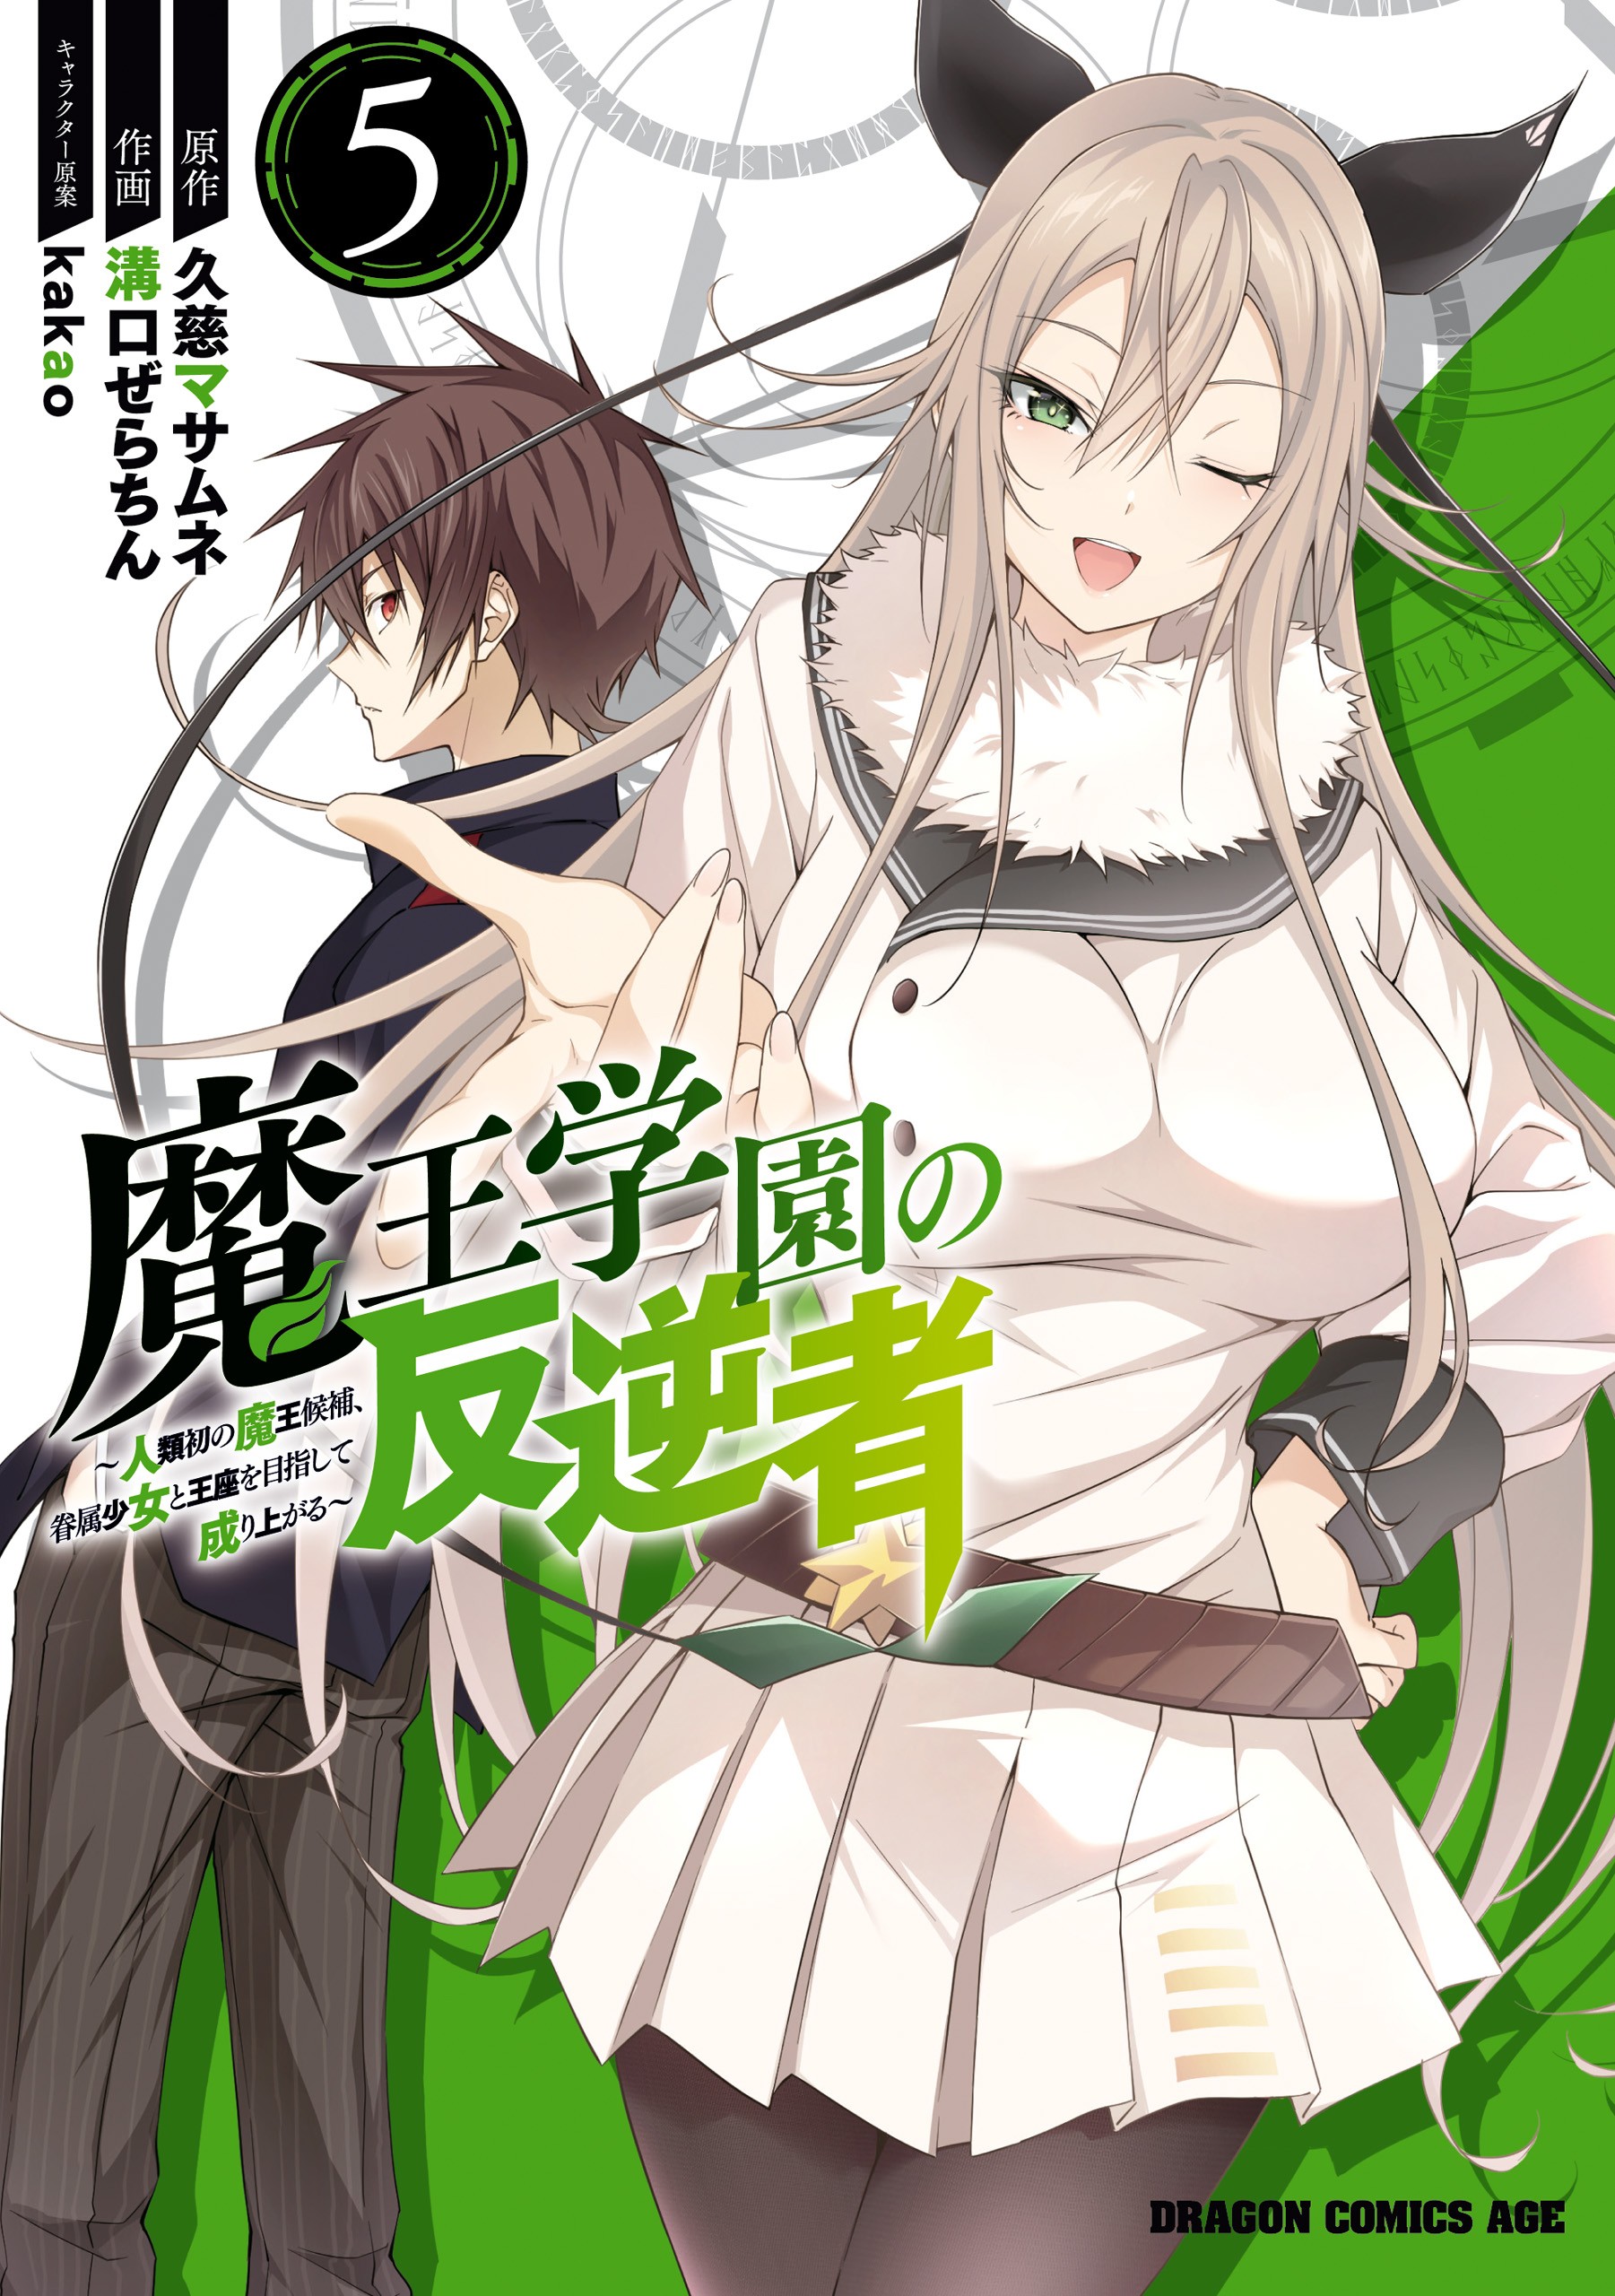 Read Cross Ange - Tenshi To Ryuu No Gakuen Chapter 15 - Mangadex